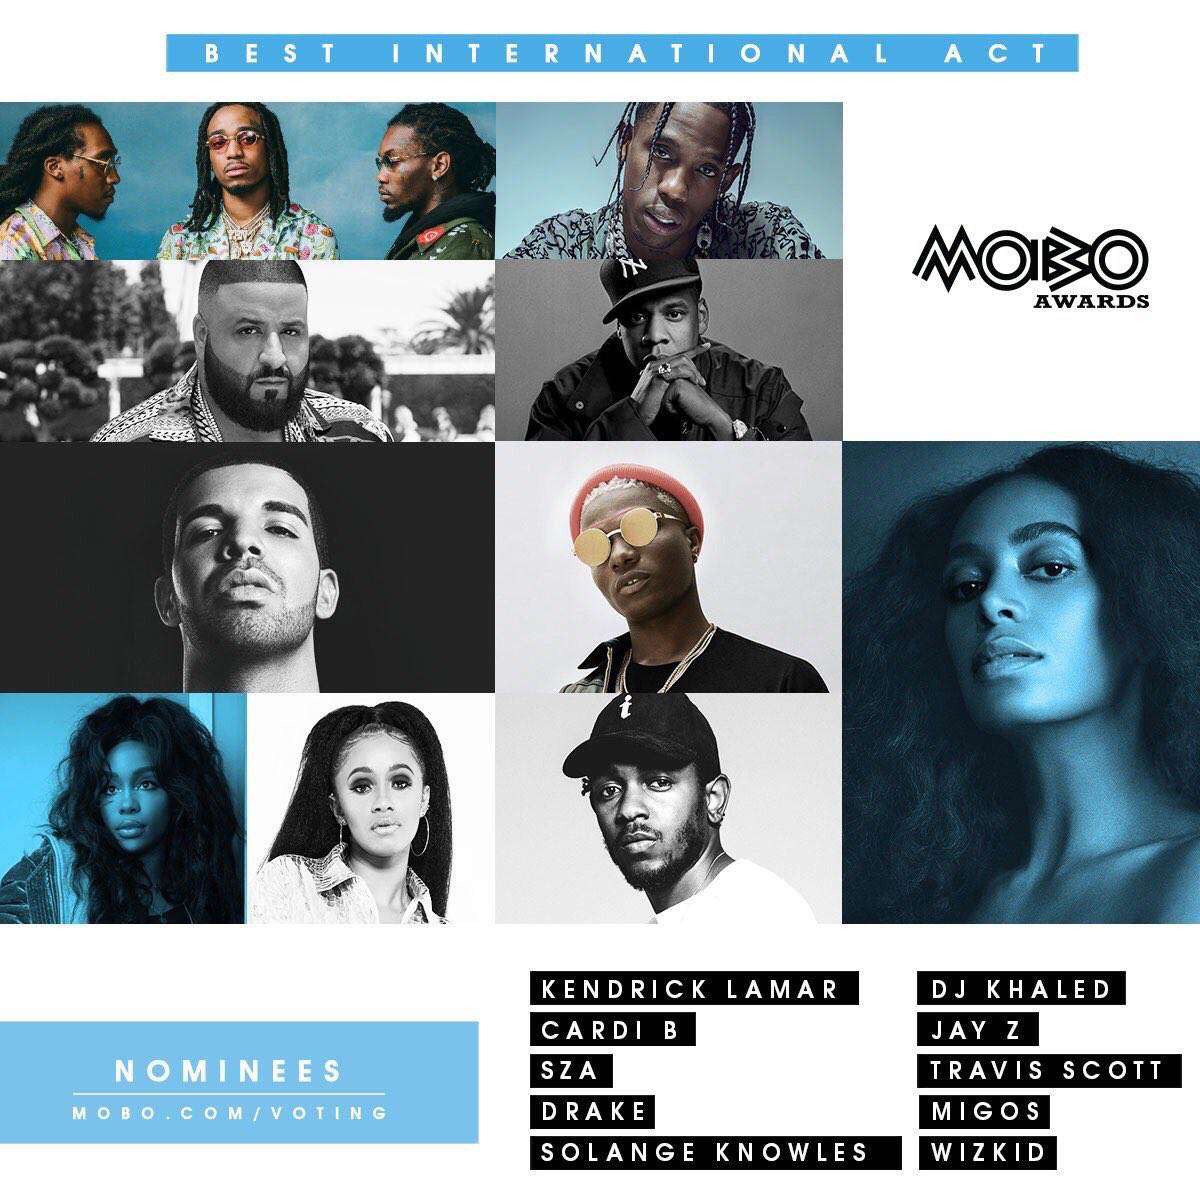 Wizkid nominated alongside Drake, Kendrick Lamar, Jay Z for MOBO Awards Best International Act